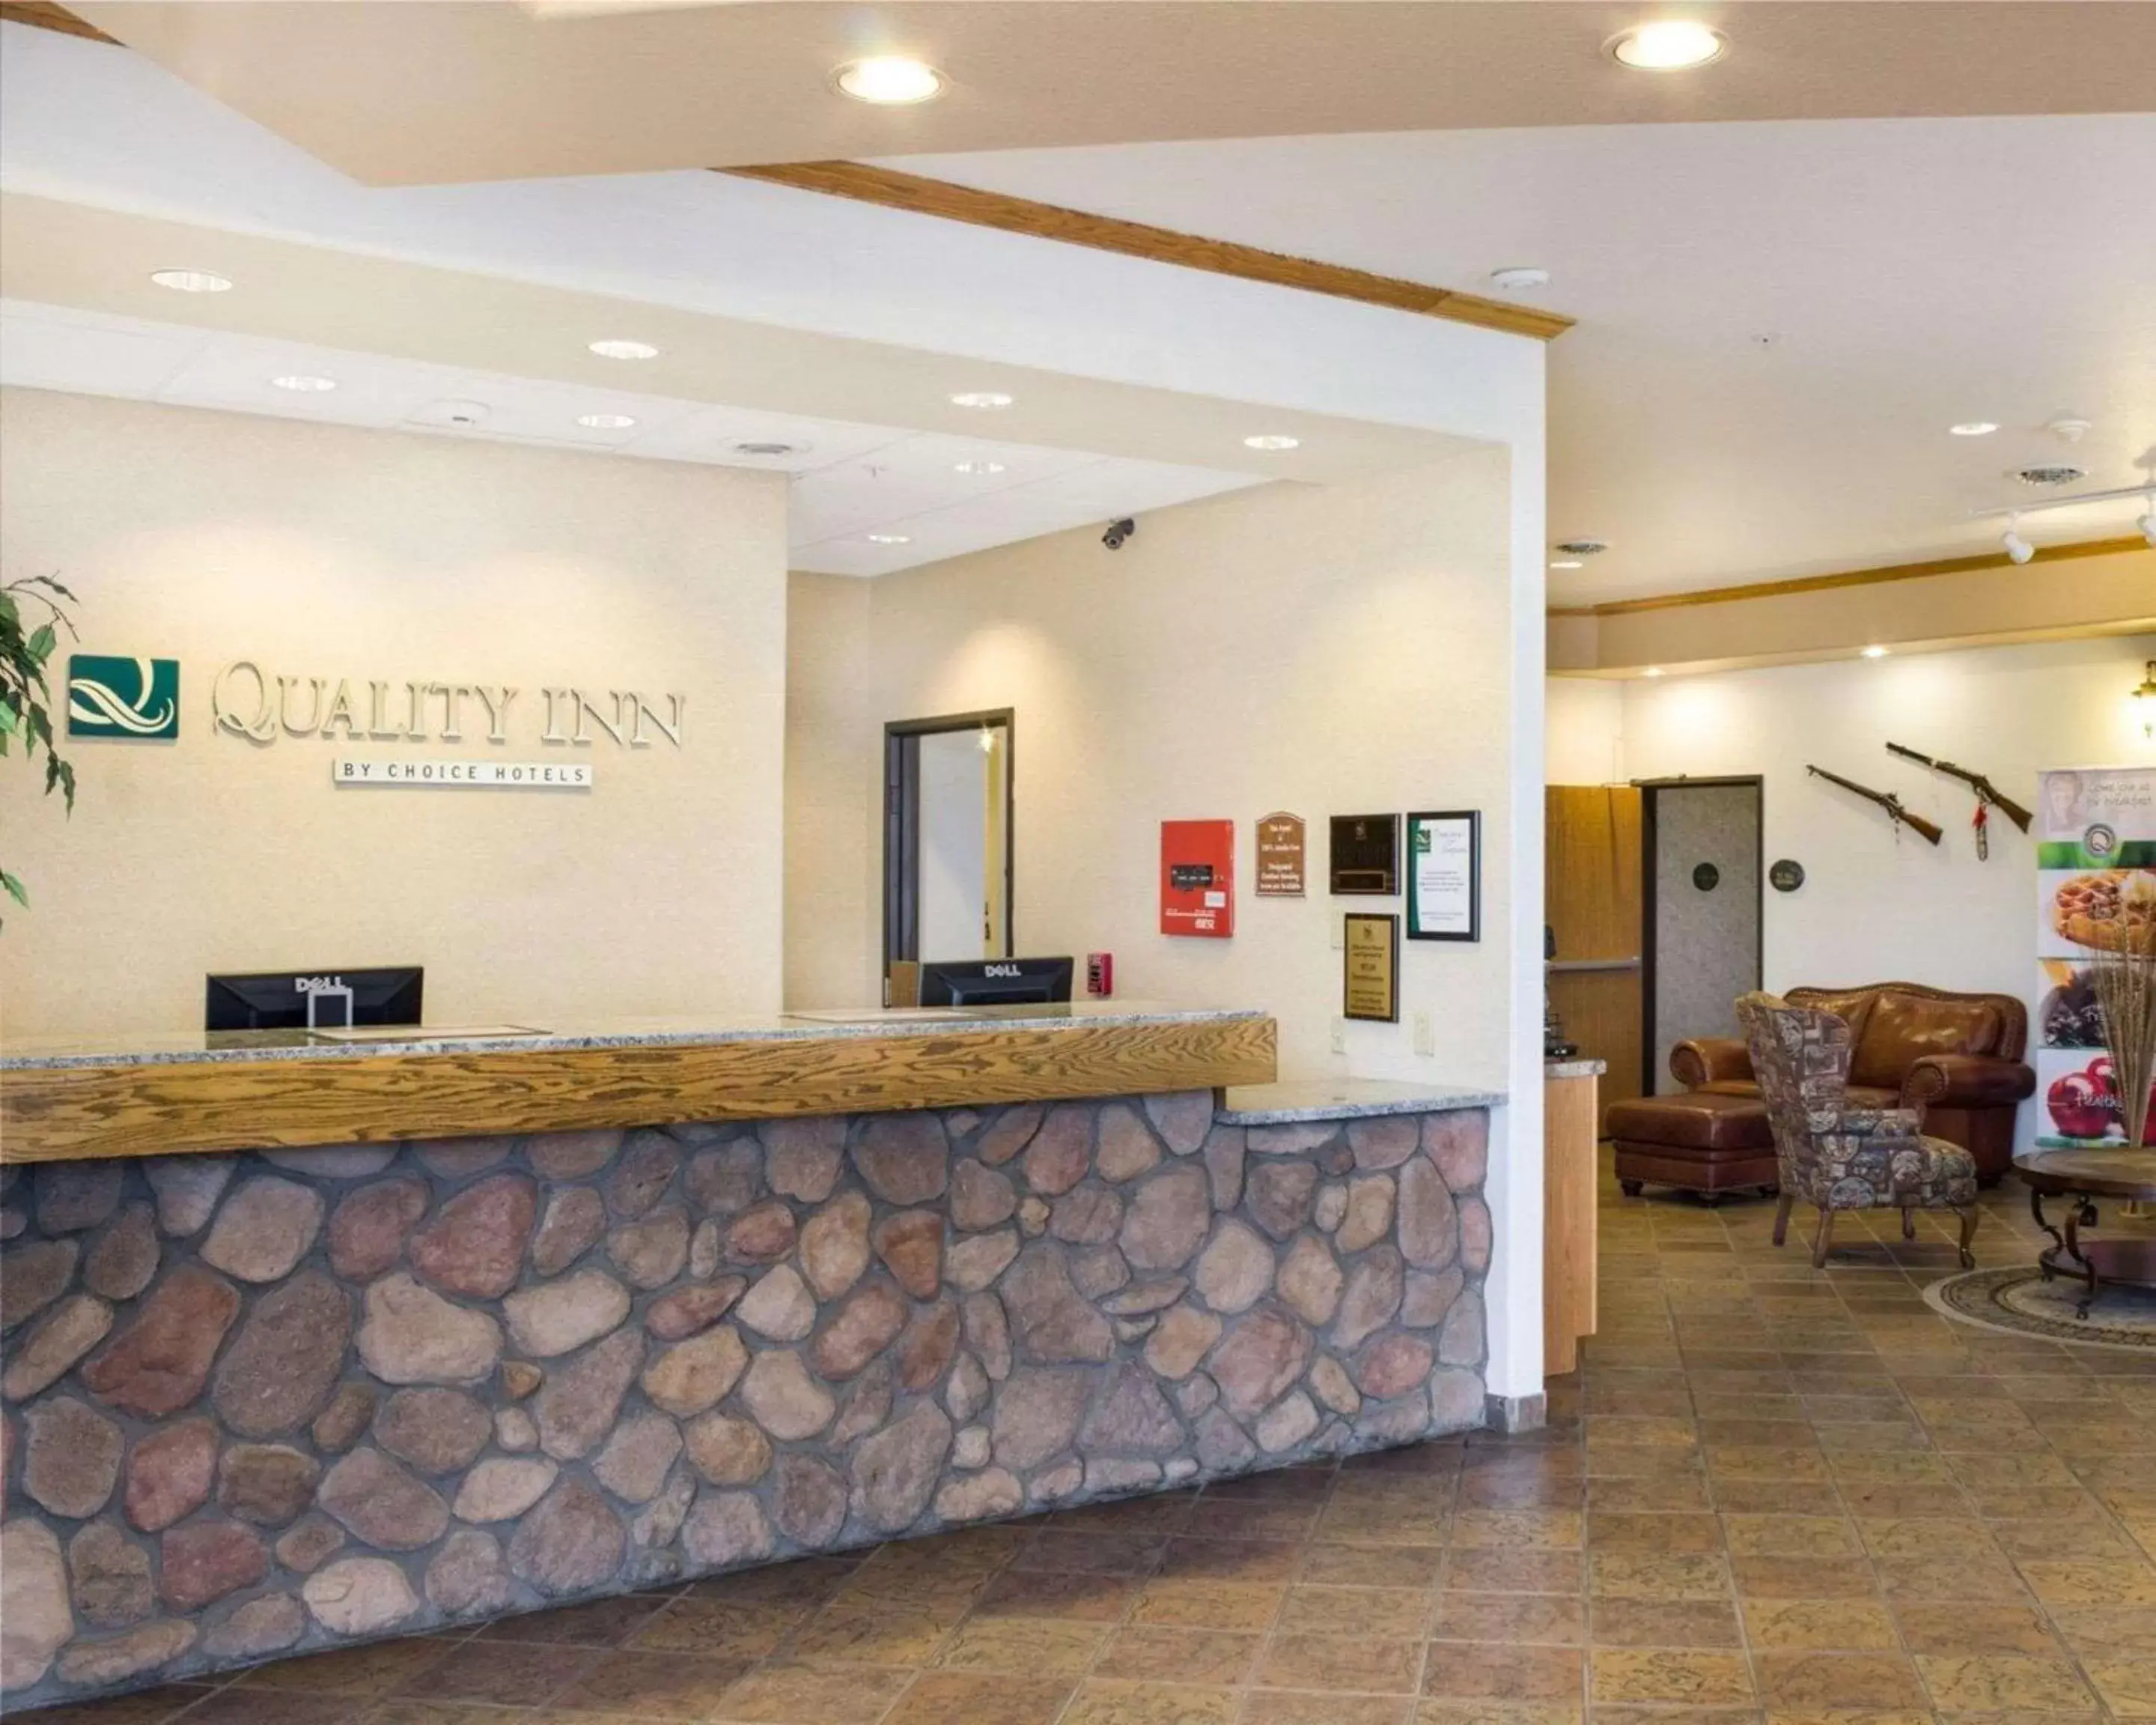 Lobby or reception, Lobby/Reception in Quality Inn Oacoma